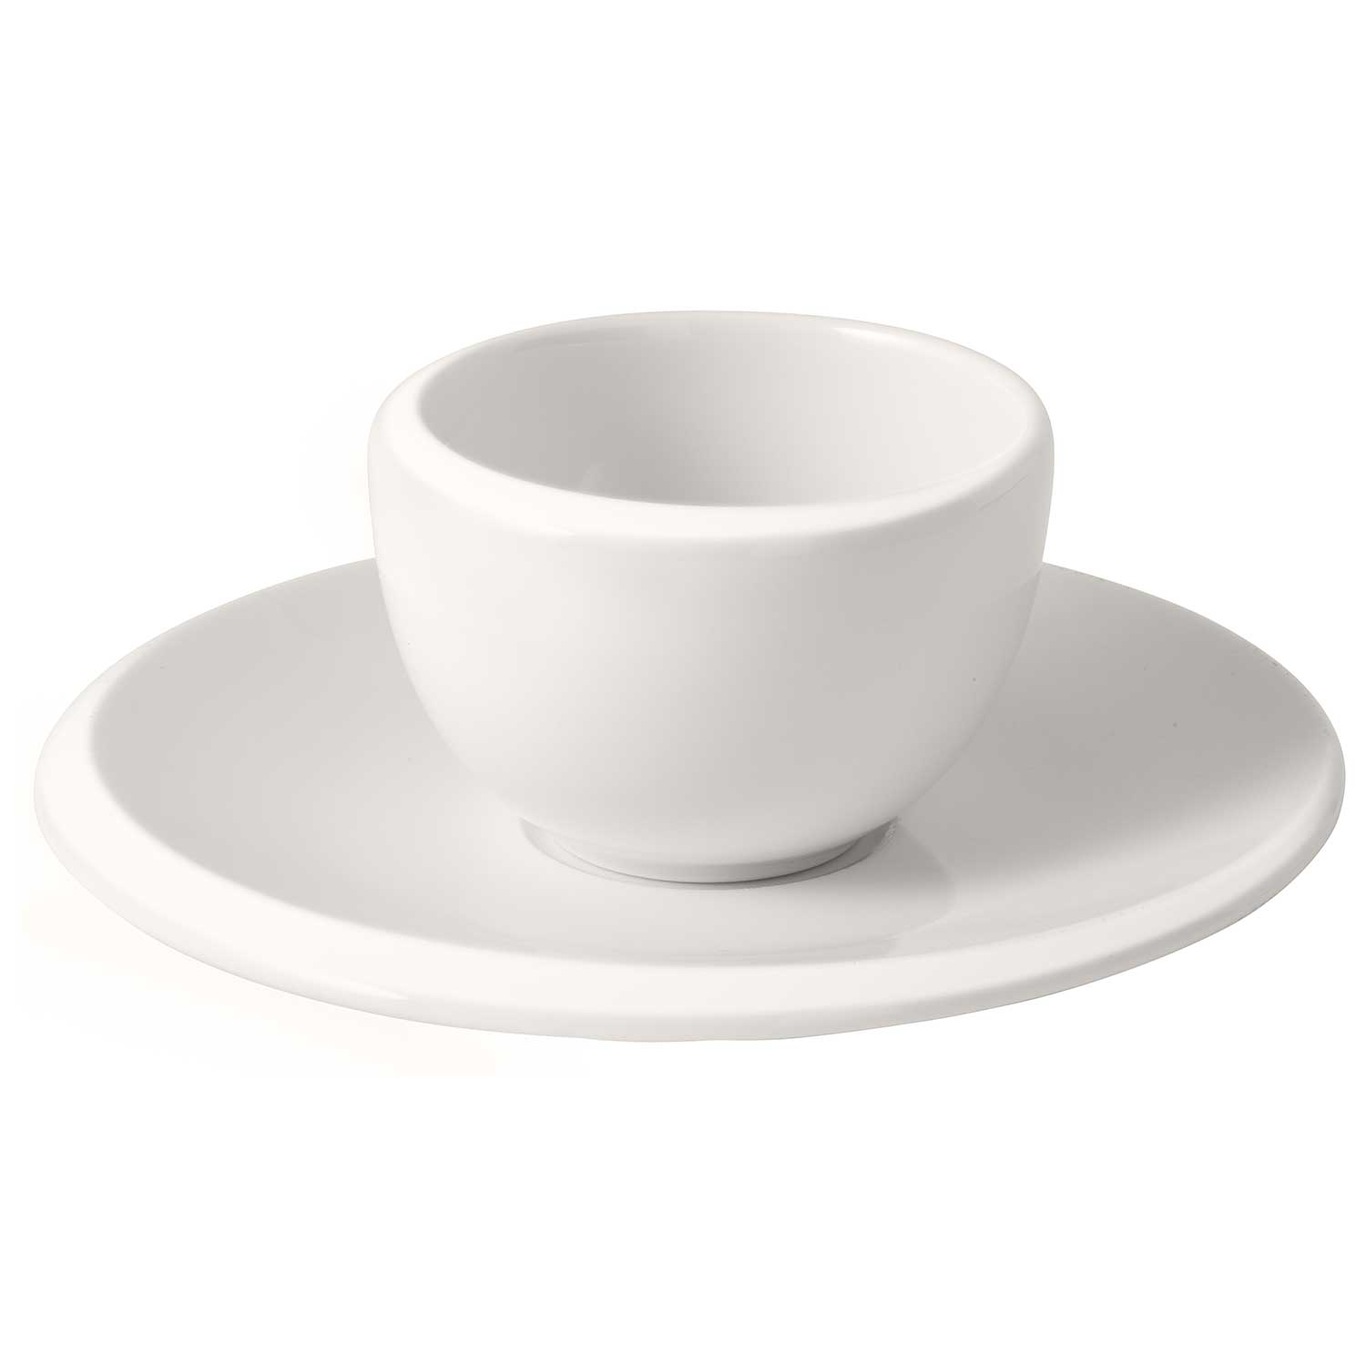 NewMoon Espresso Cup & Saucer, 10 cl